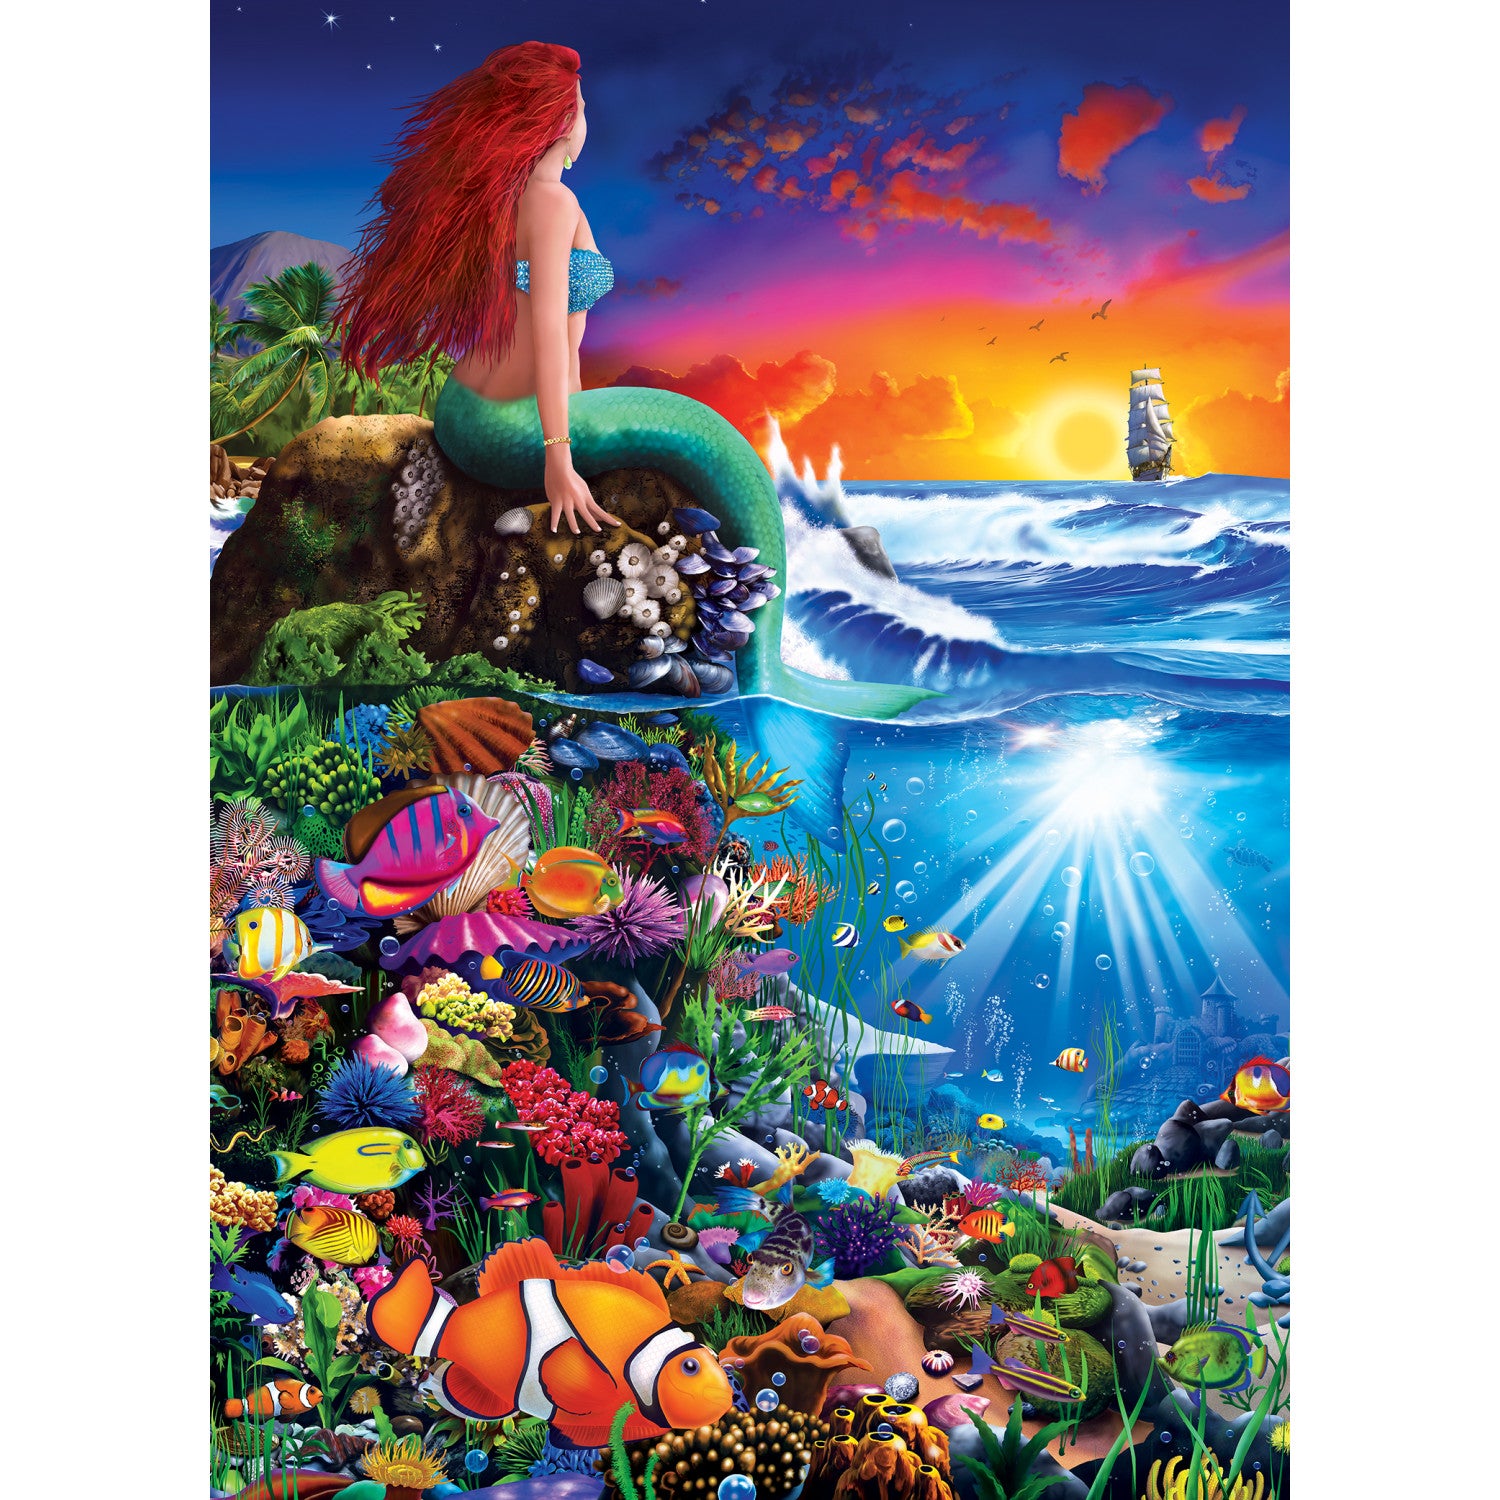 Classic Fairytales - Little Mermaid 1000 Piece Puzzle